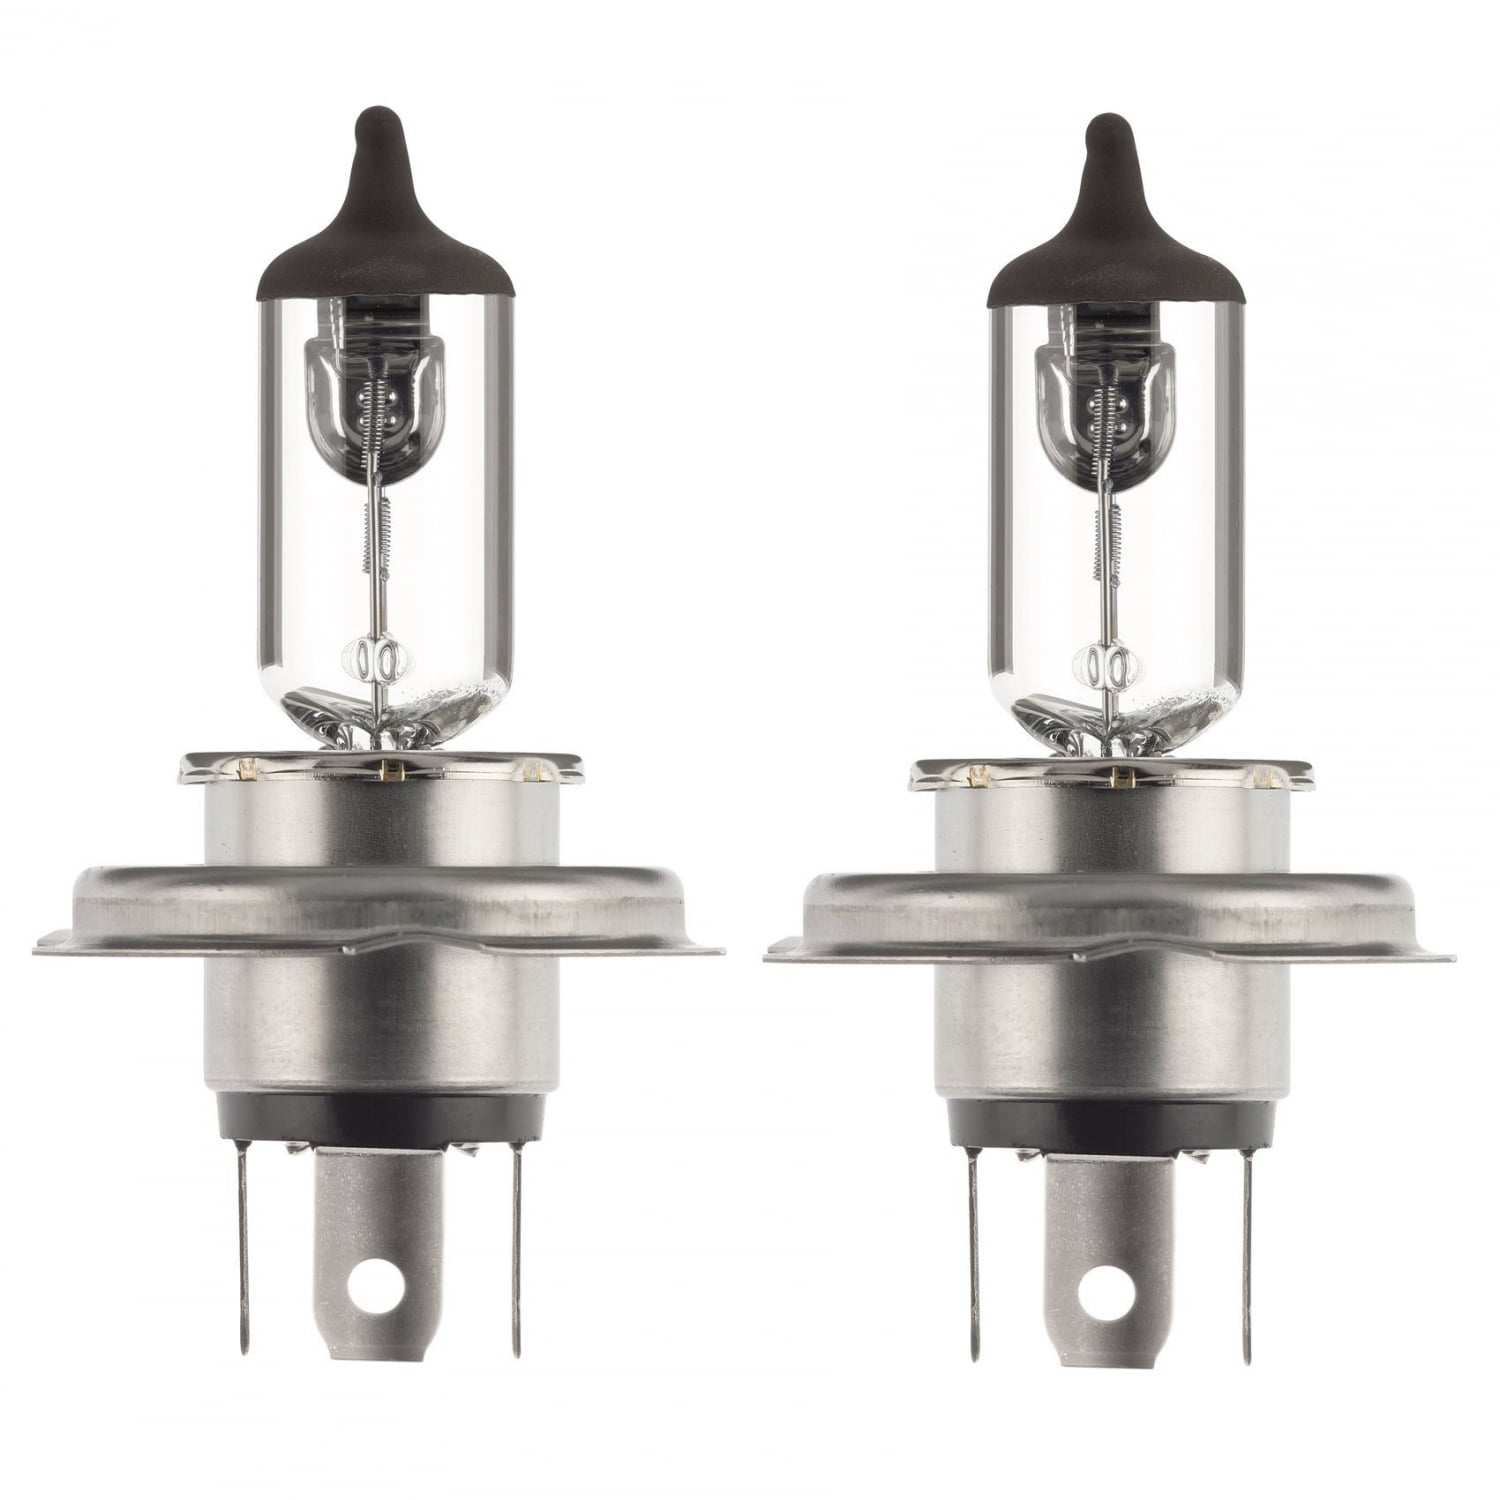 H4 Halogen Headlight Headlamp Replacement Clear Bulbs 12V 60/55W Pair New